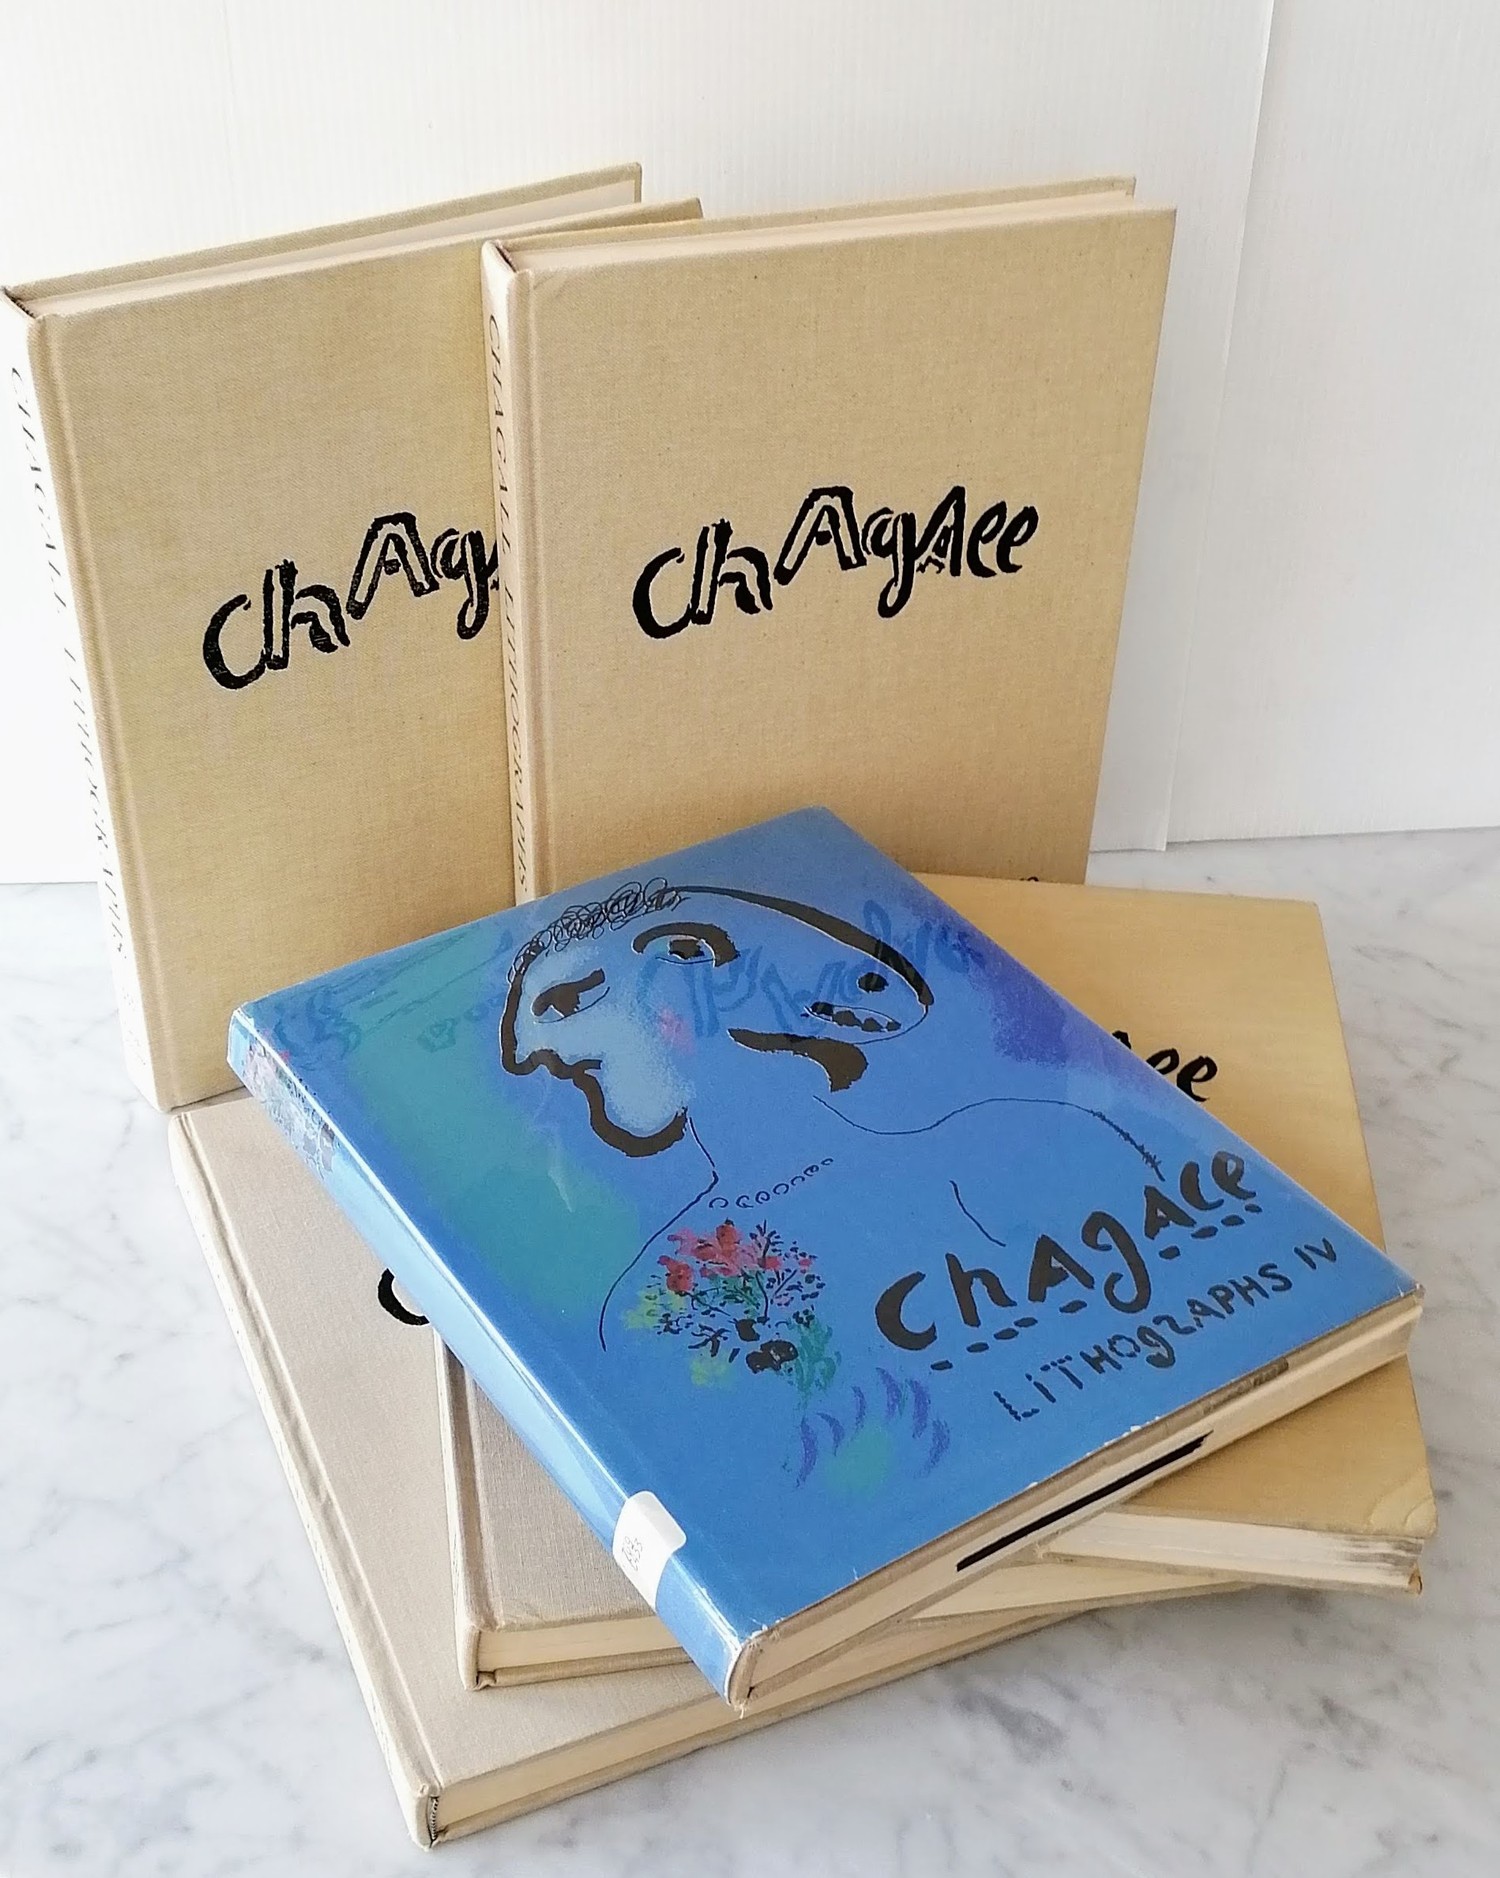 CHAGALL, Marc (1887-1985). Chagall Lithographs. Vol.I: Monte Carlo: Andre Sauret, 1960; Vol.II: